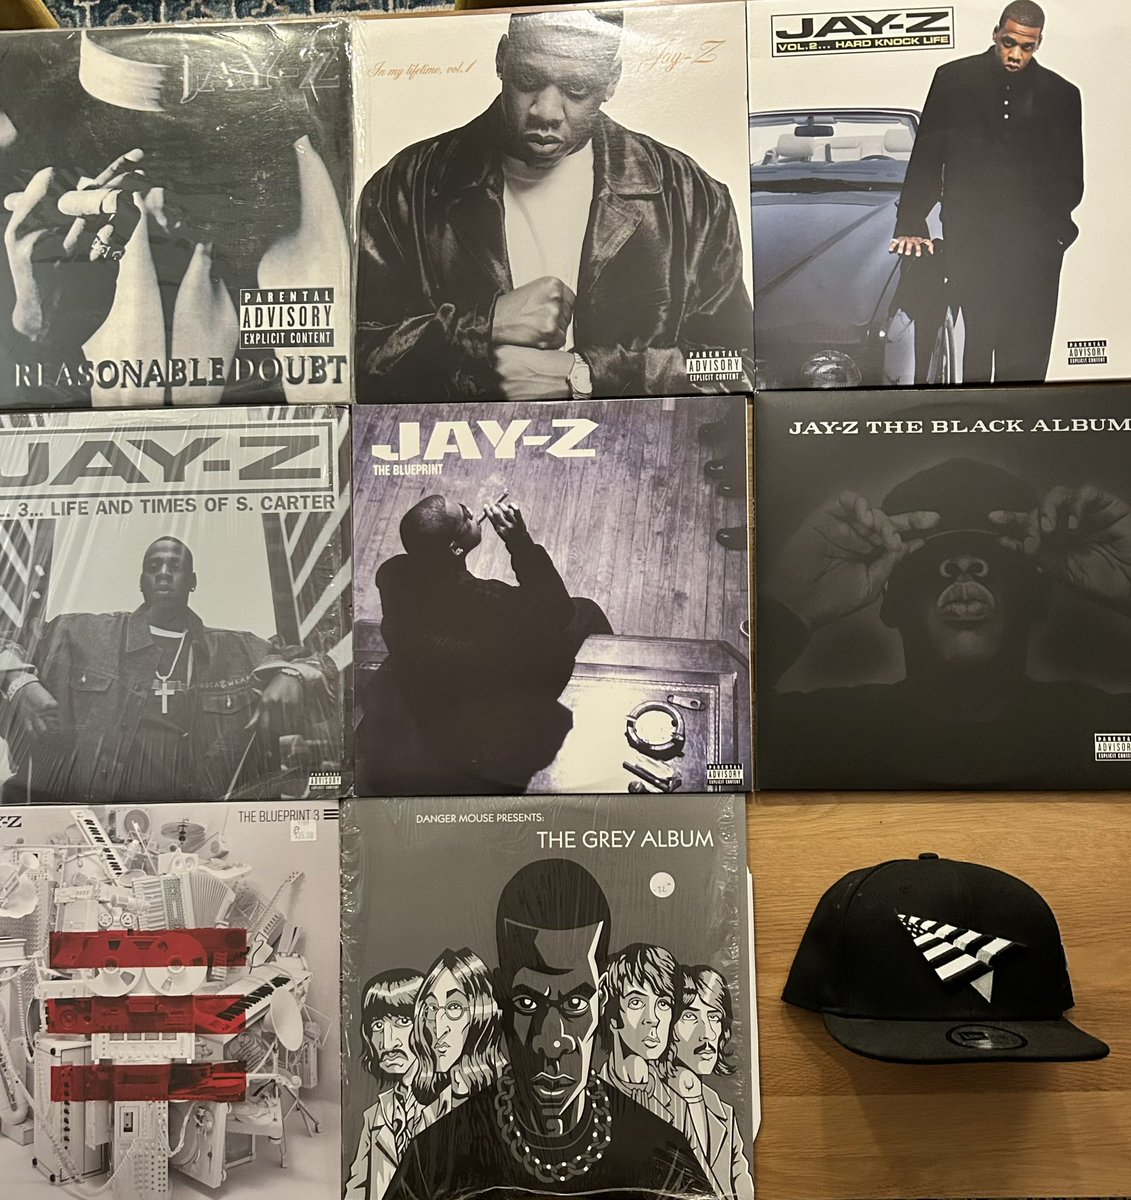 #Thehuntcontinues #vinylcollector #rocafella #JayZ #hiphop